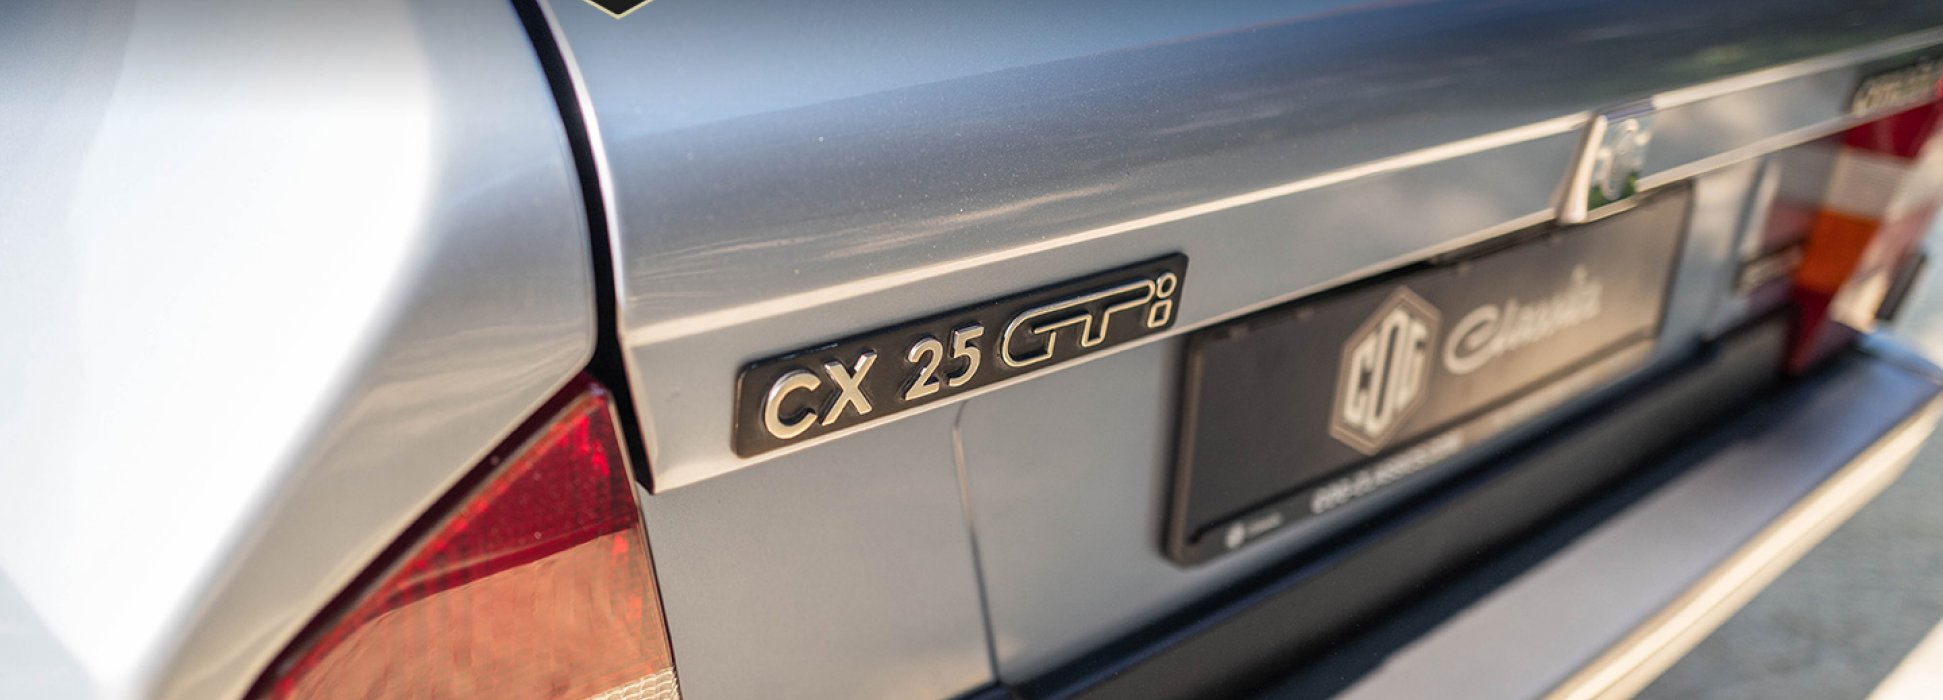 Citroën CX 25 GTI Automatic 12